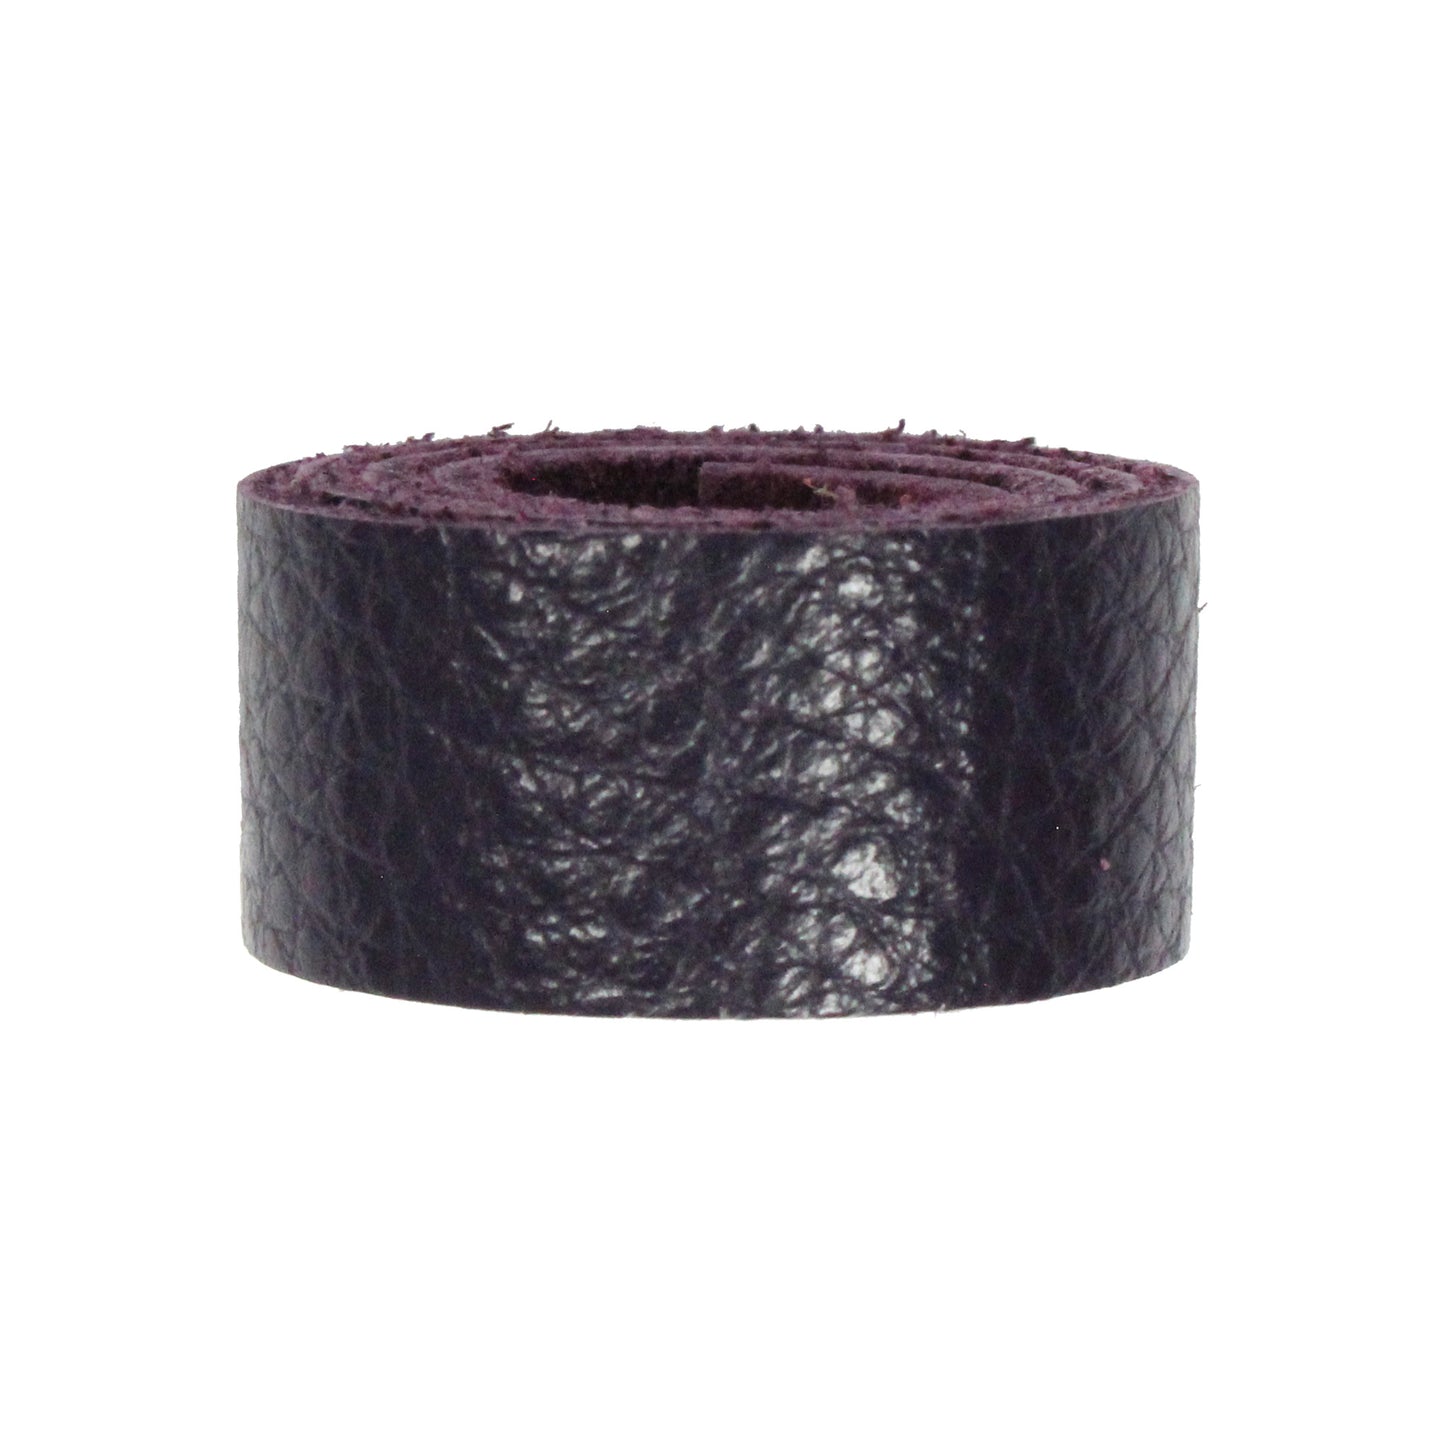 PURPLE Leather Strap / pre-cut 10 inch (Length) x 1/2 inch (Wide) / TierraCast USA